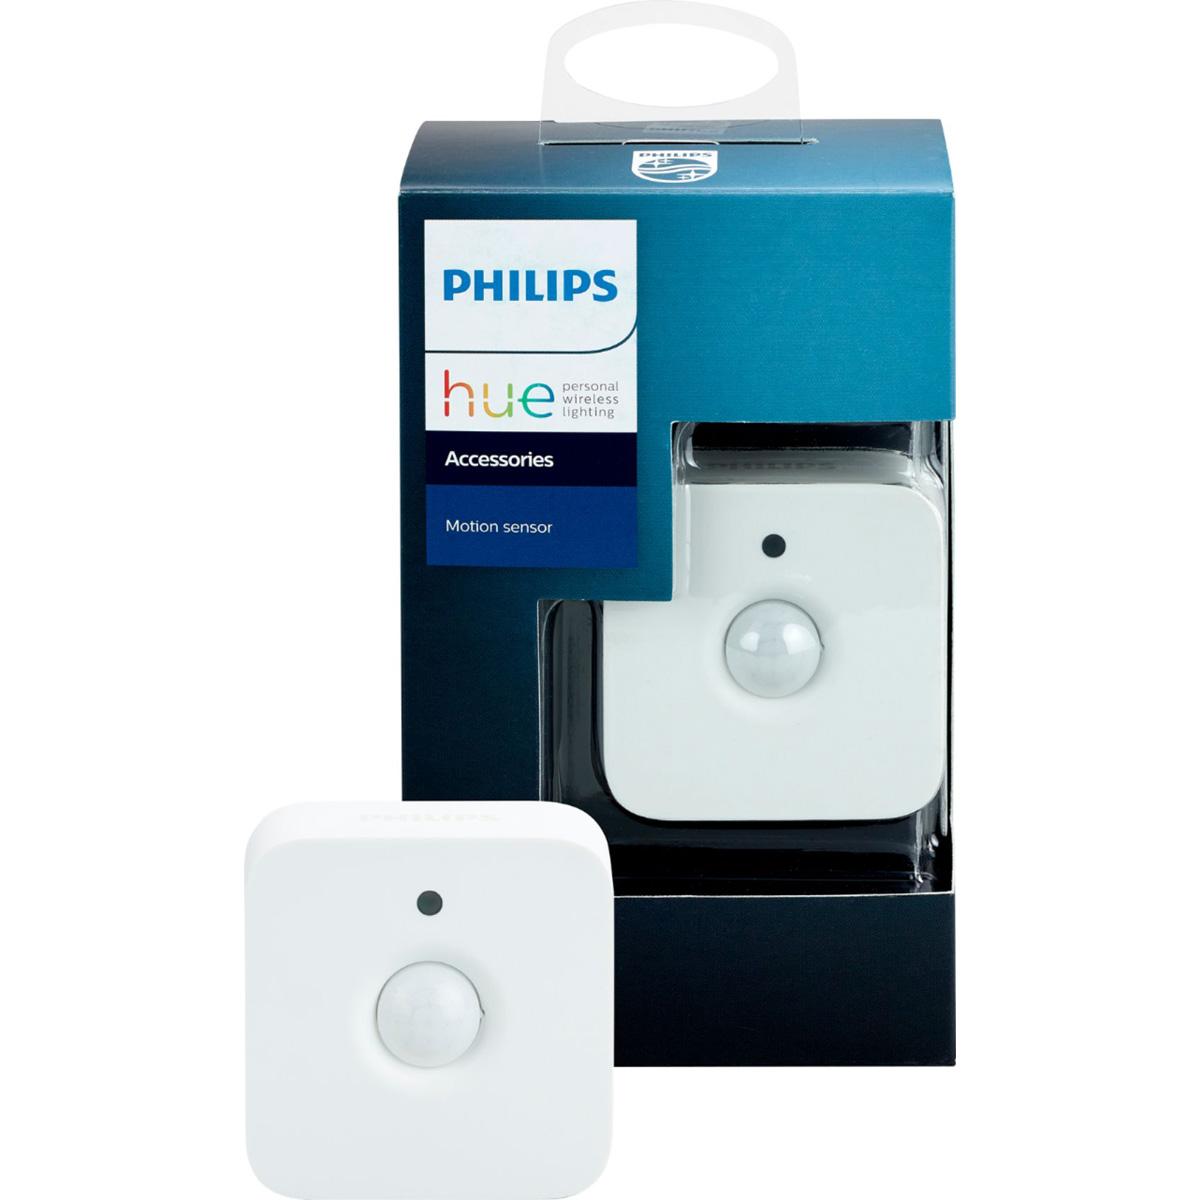 Philips Hue Motion Sensor for $29.99 Shipped